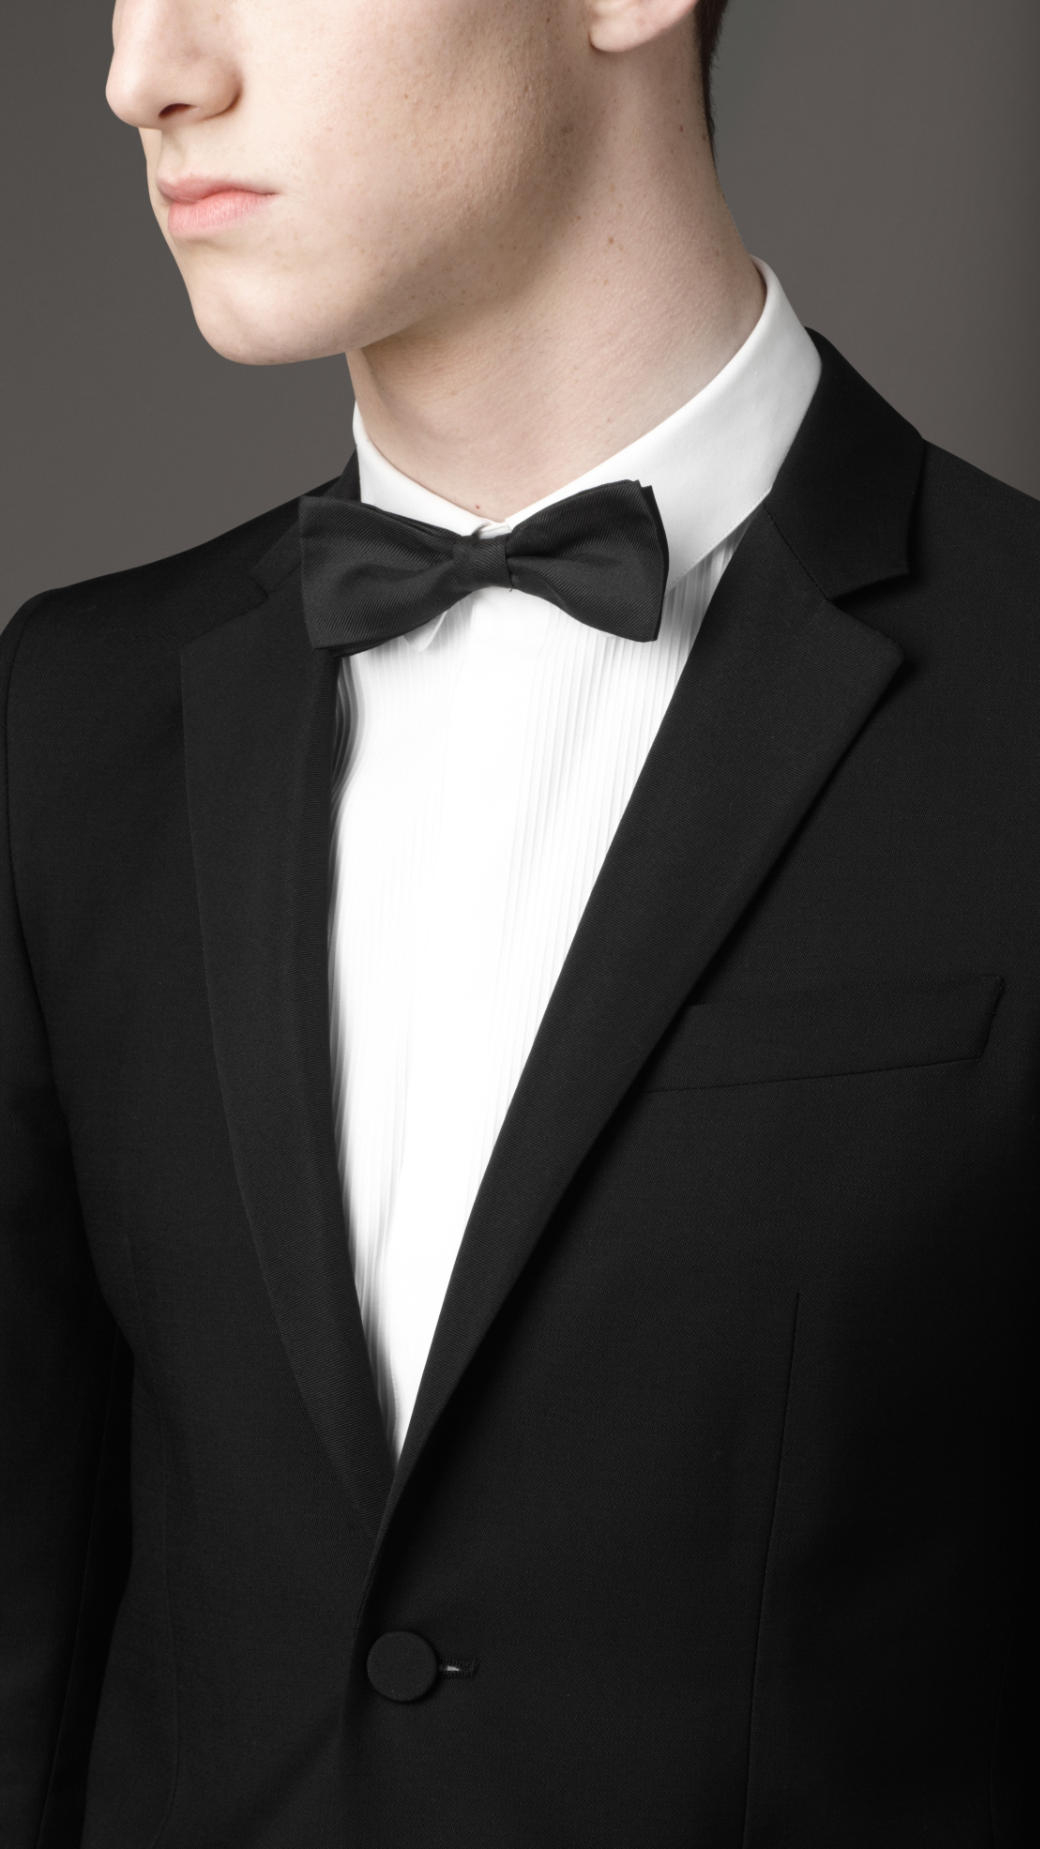 Burberry Modern Fit Wool Mohair Tuxedo in Black for Men - Lyst